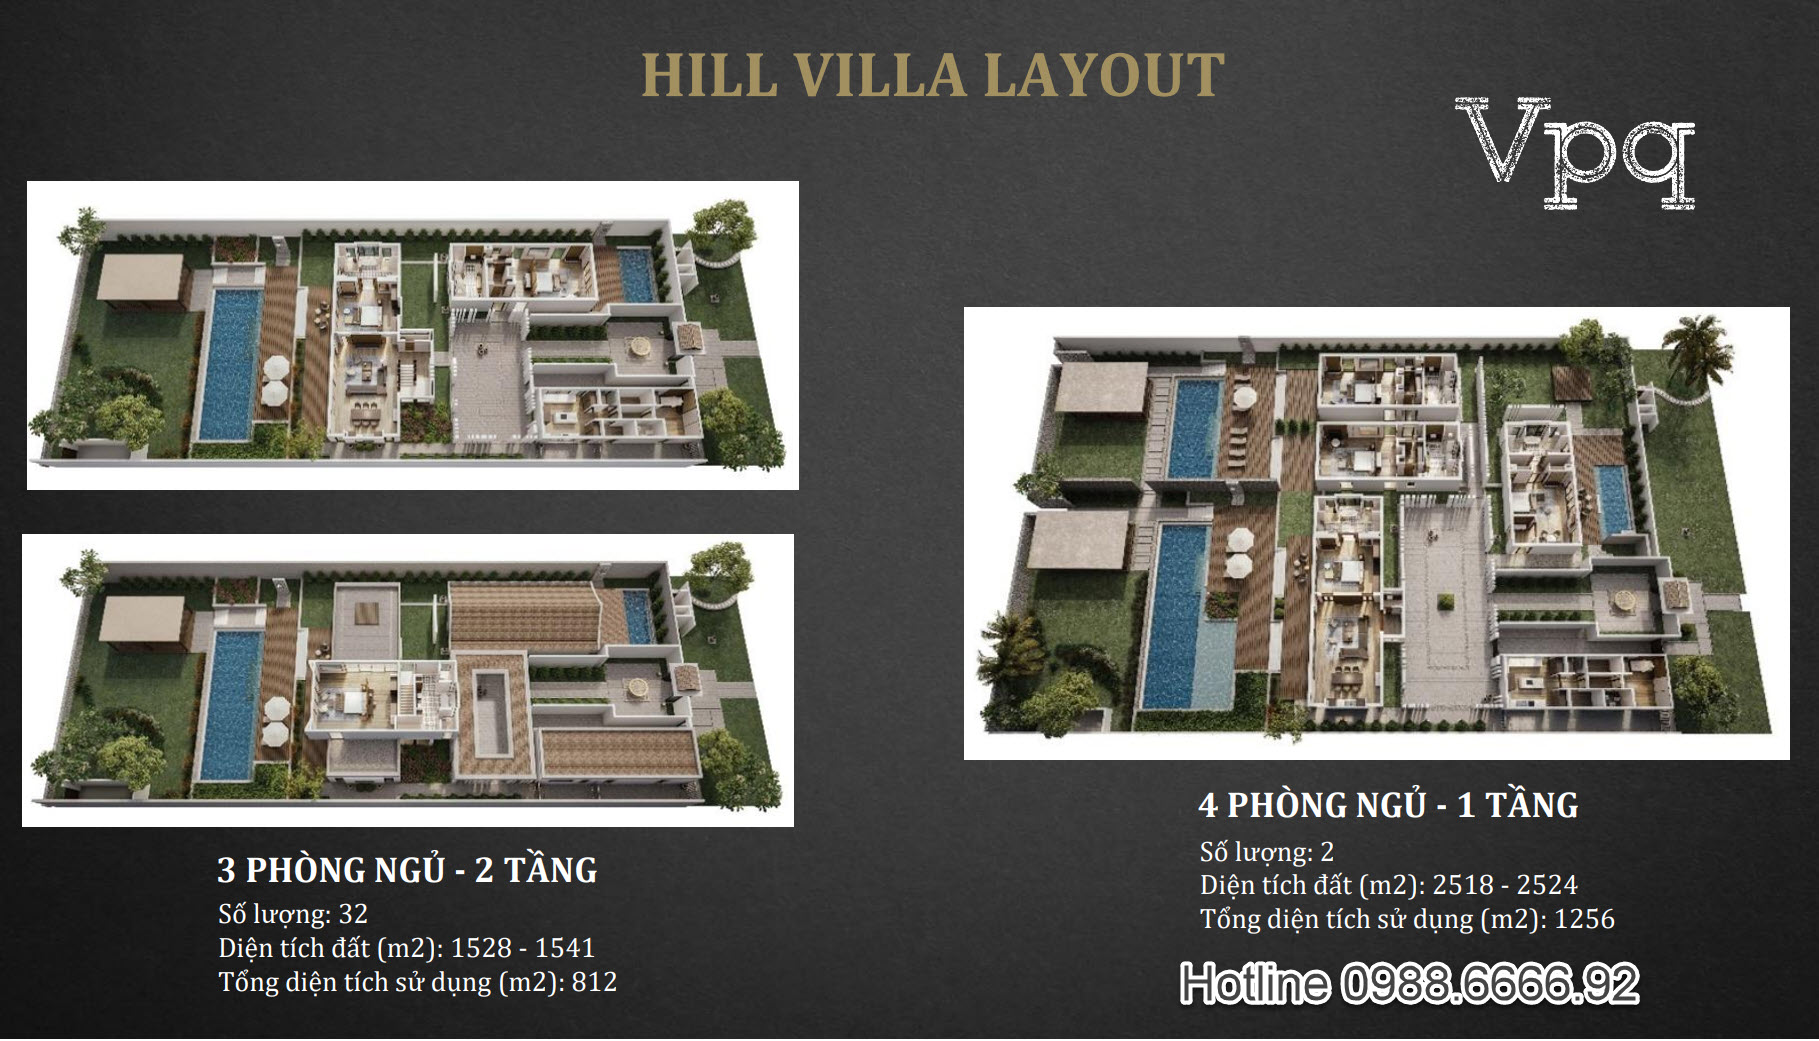 Hill Villa Layout